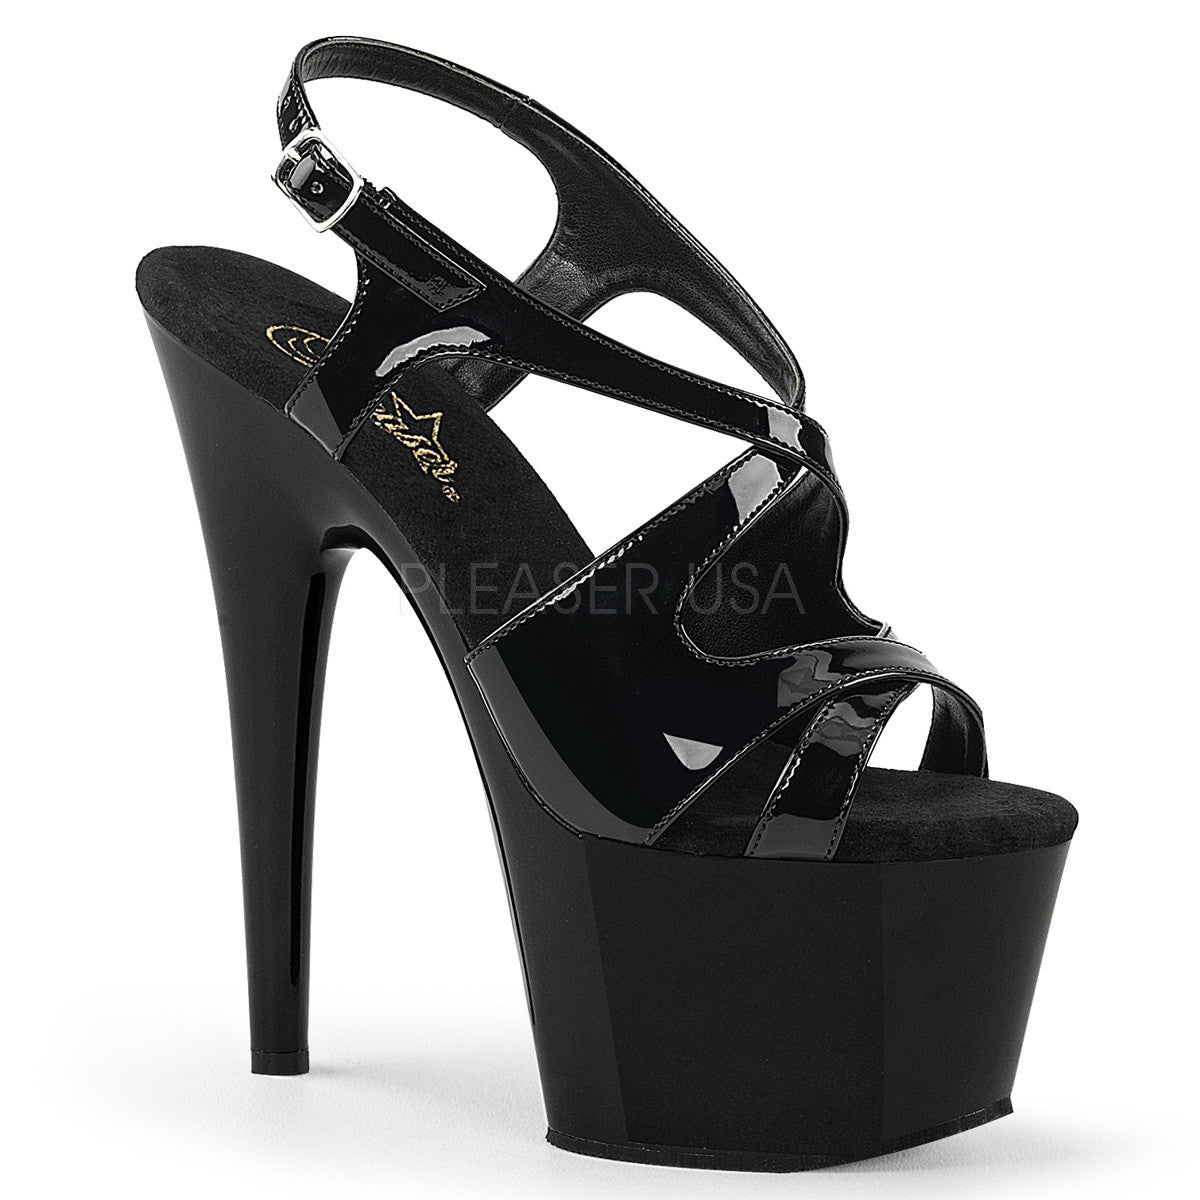 7" Heel ADORE-730 Black Exotic Dancing Shoes